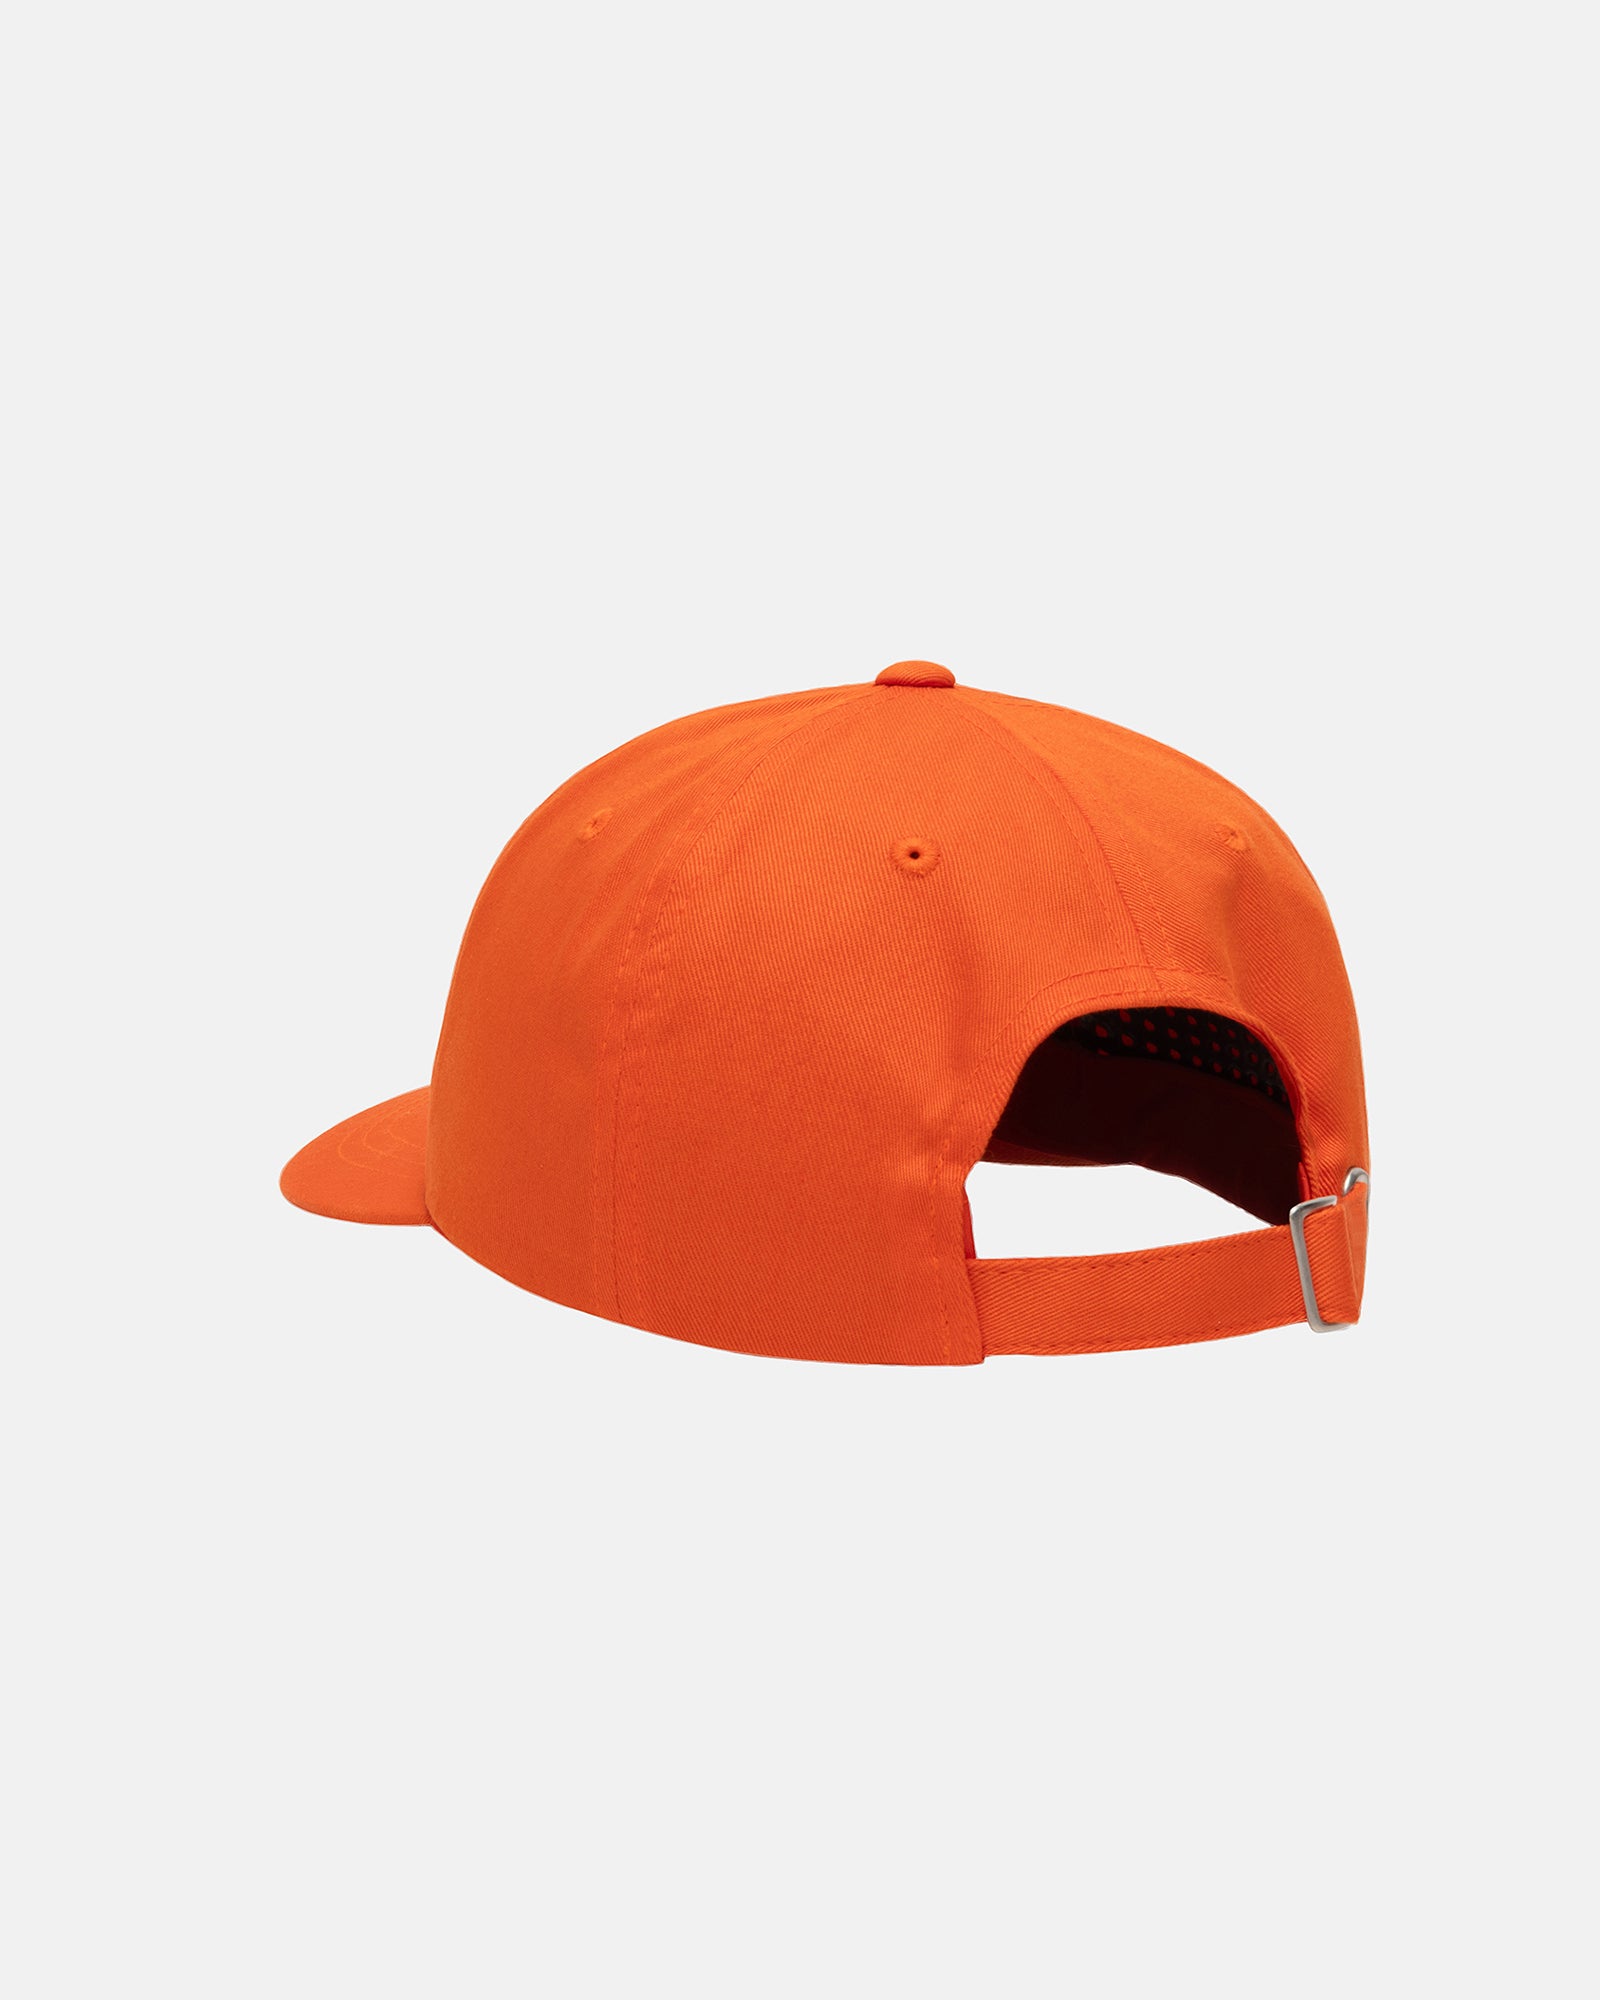 Stüssy Low Pro 3 Star Strapback Orange Headwear